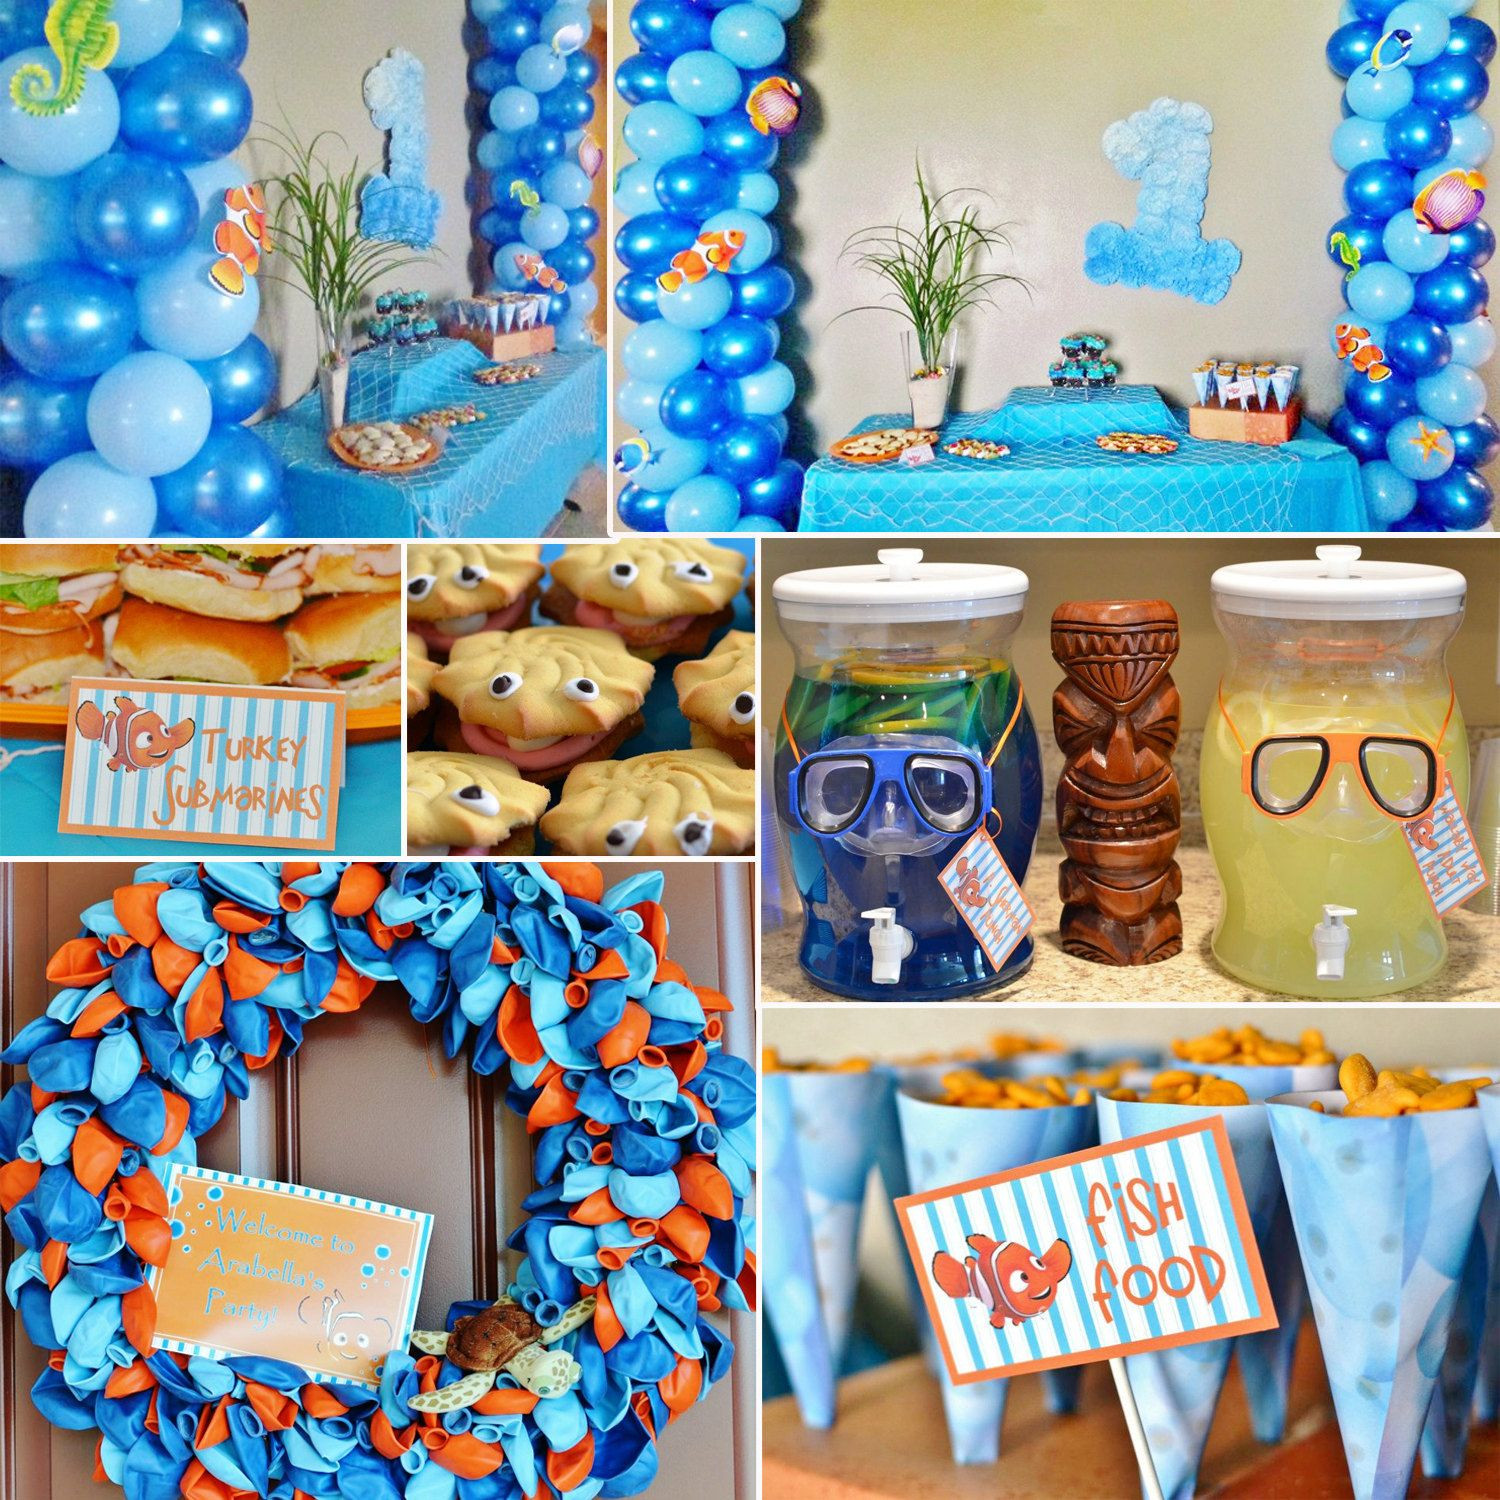 DIY Finding Nemo Decorations
 DIY Digital Customized Finding Nemo Party Pack Bundle $45